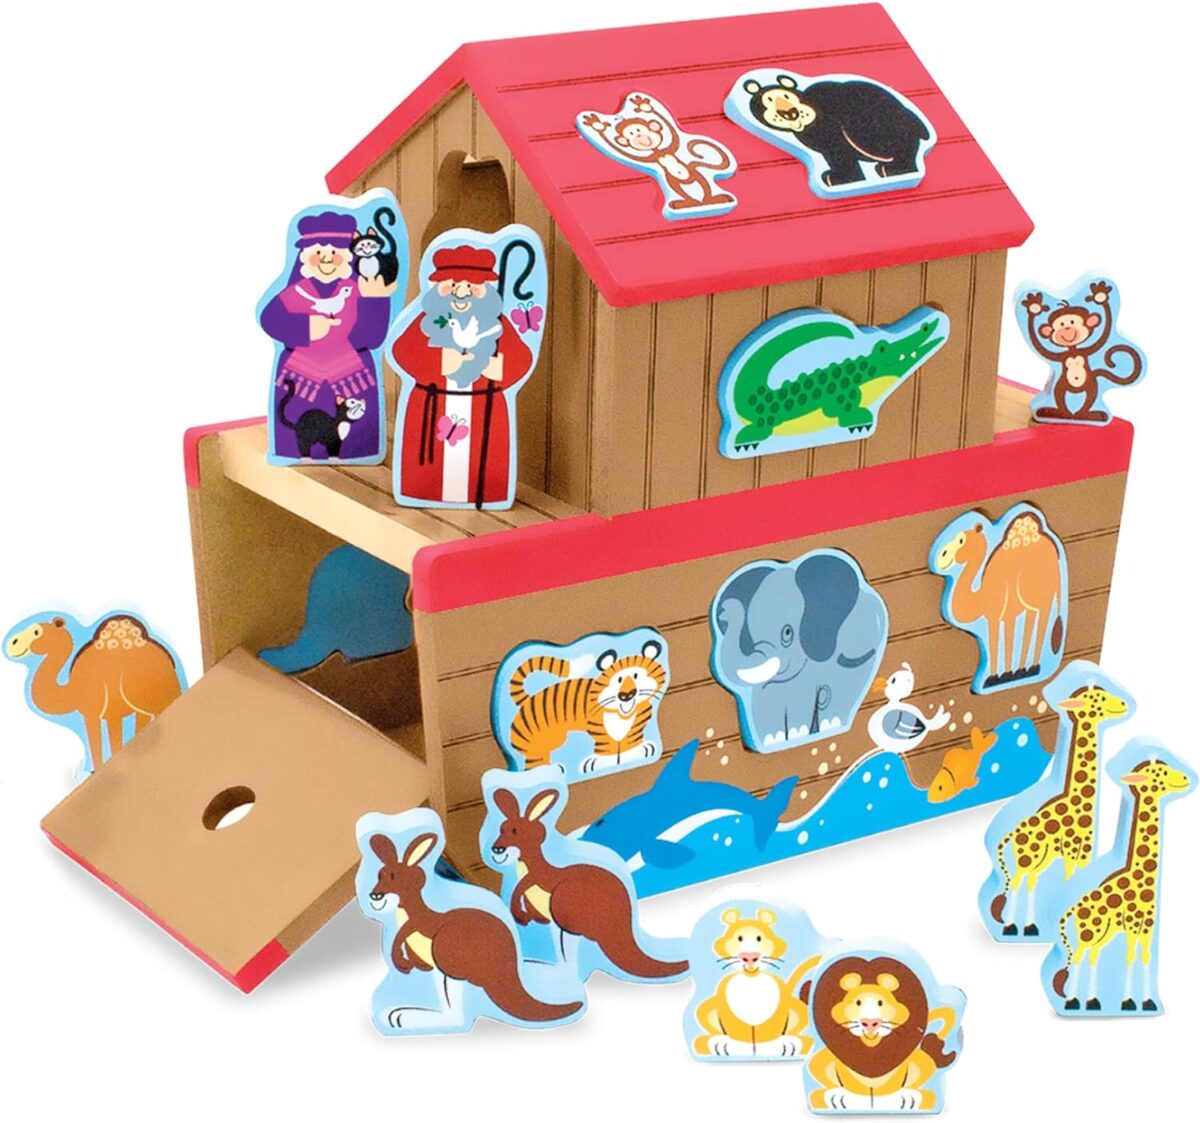 Noah's ark wooden puzzle - a perfect spiritual gift idea for children.